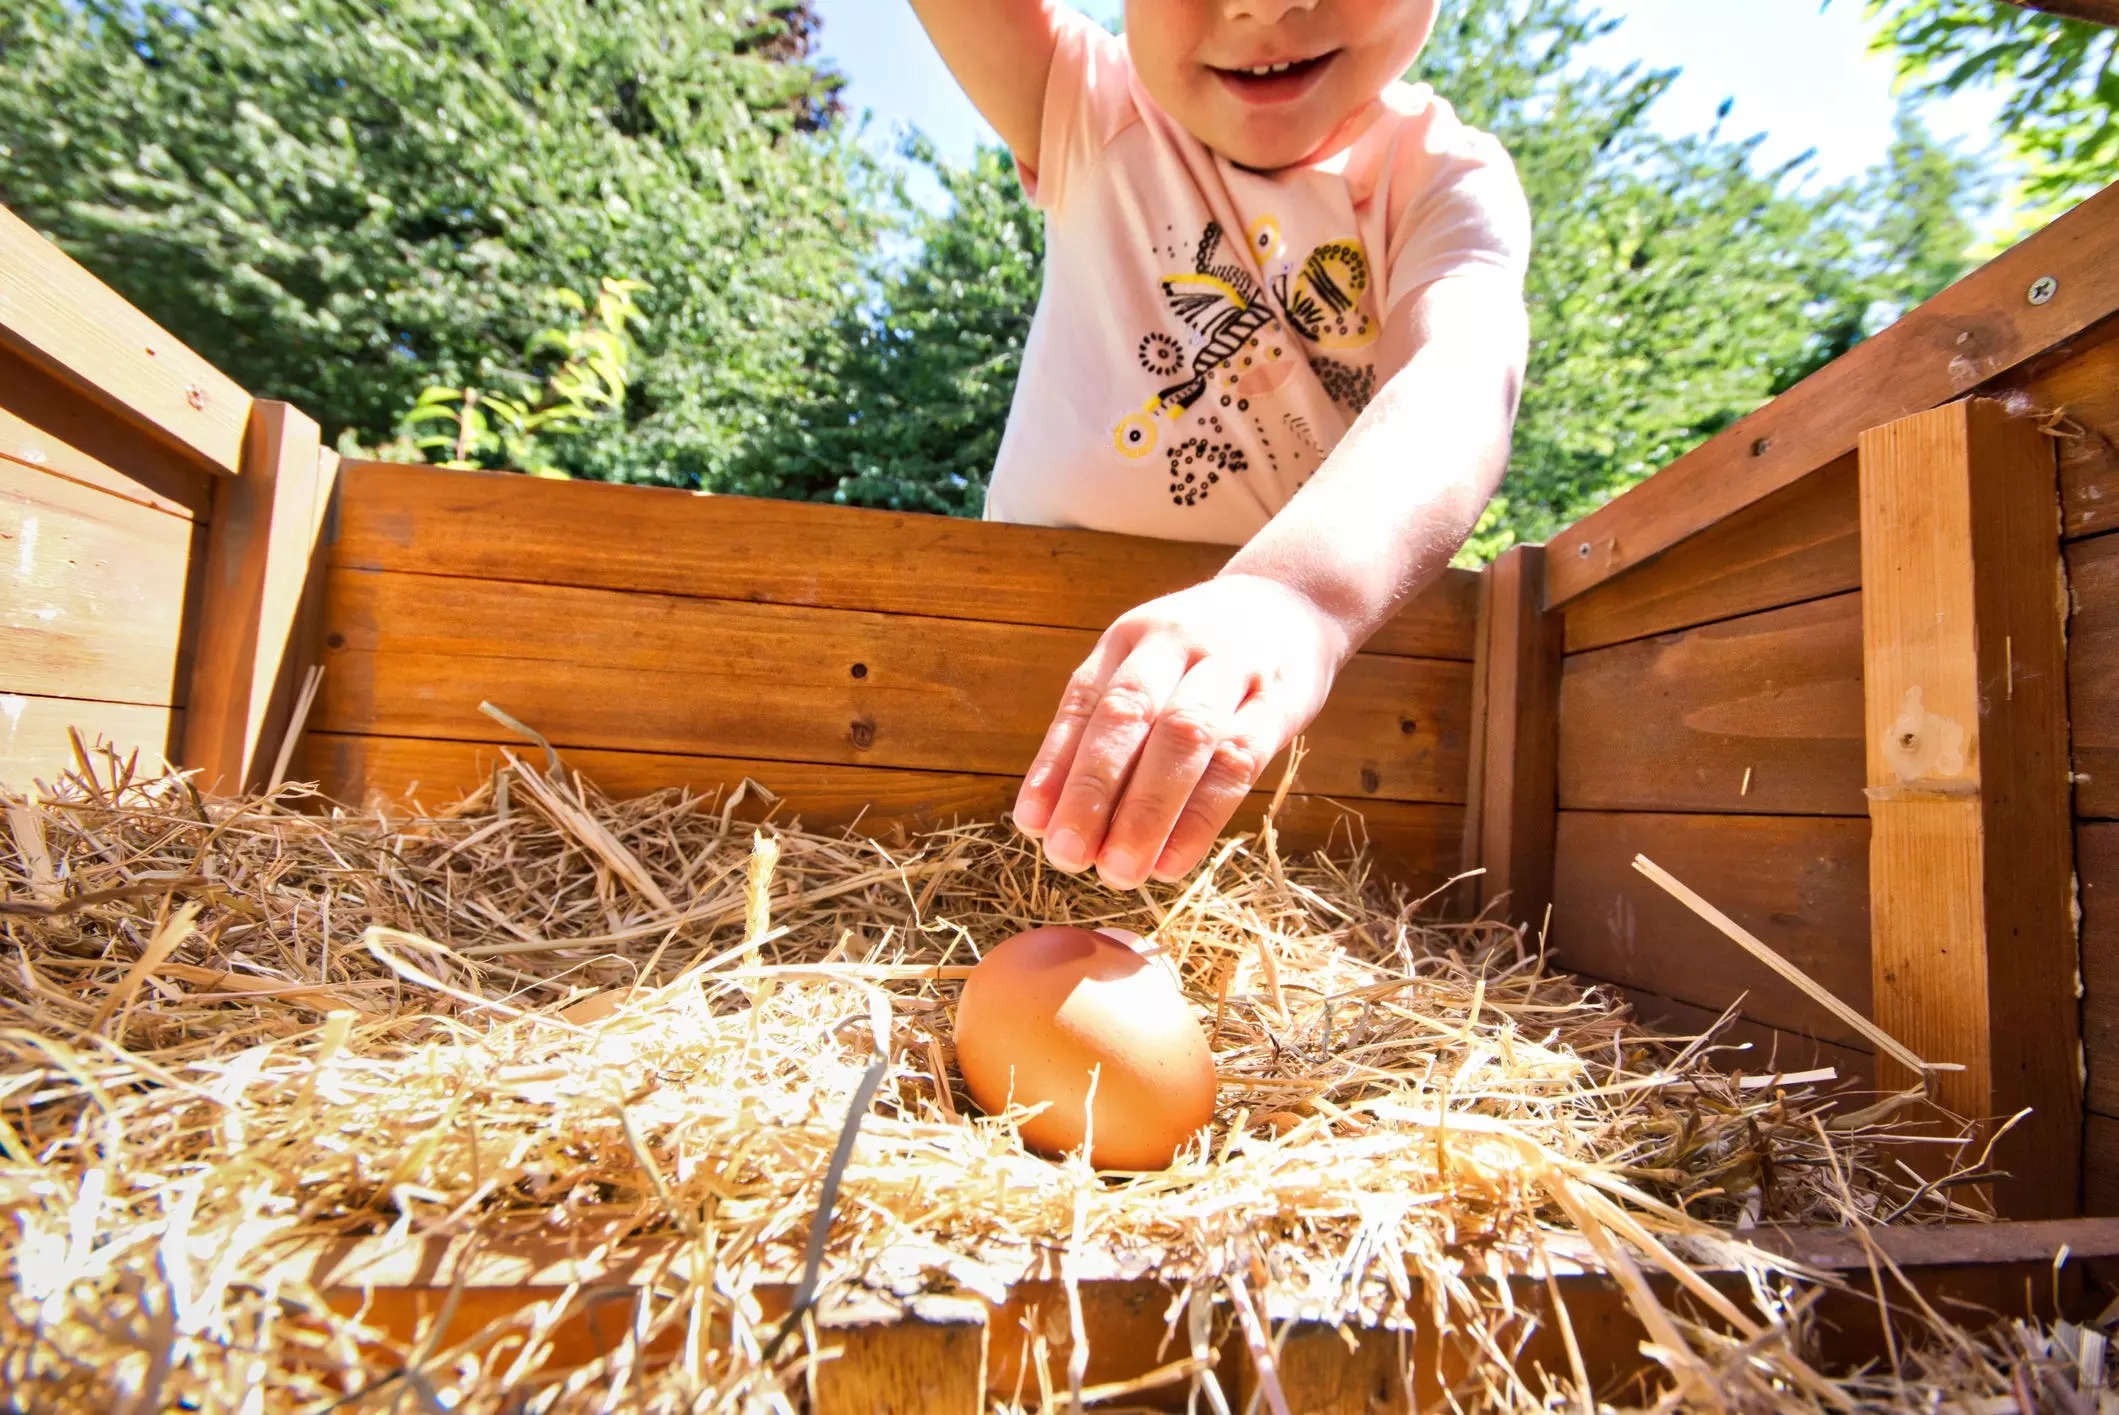 Child finds an egg in a farmhouse garden.